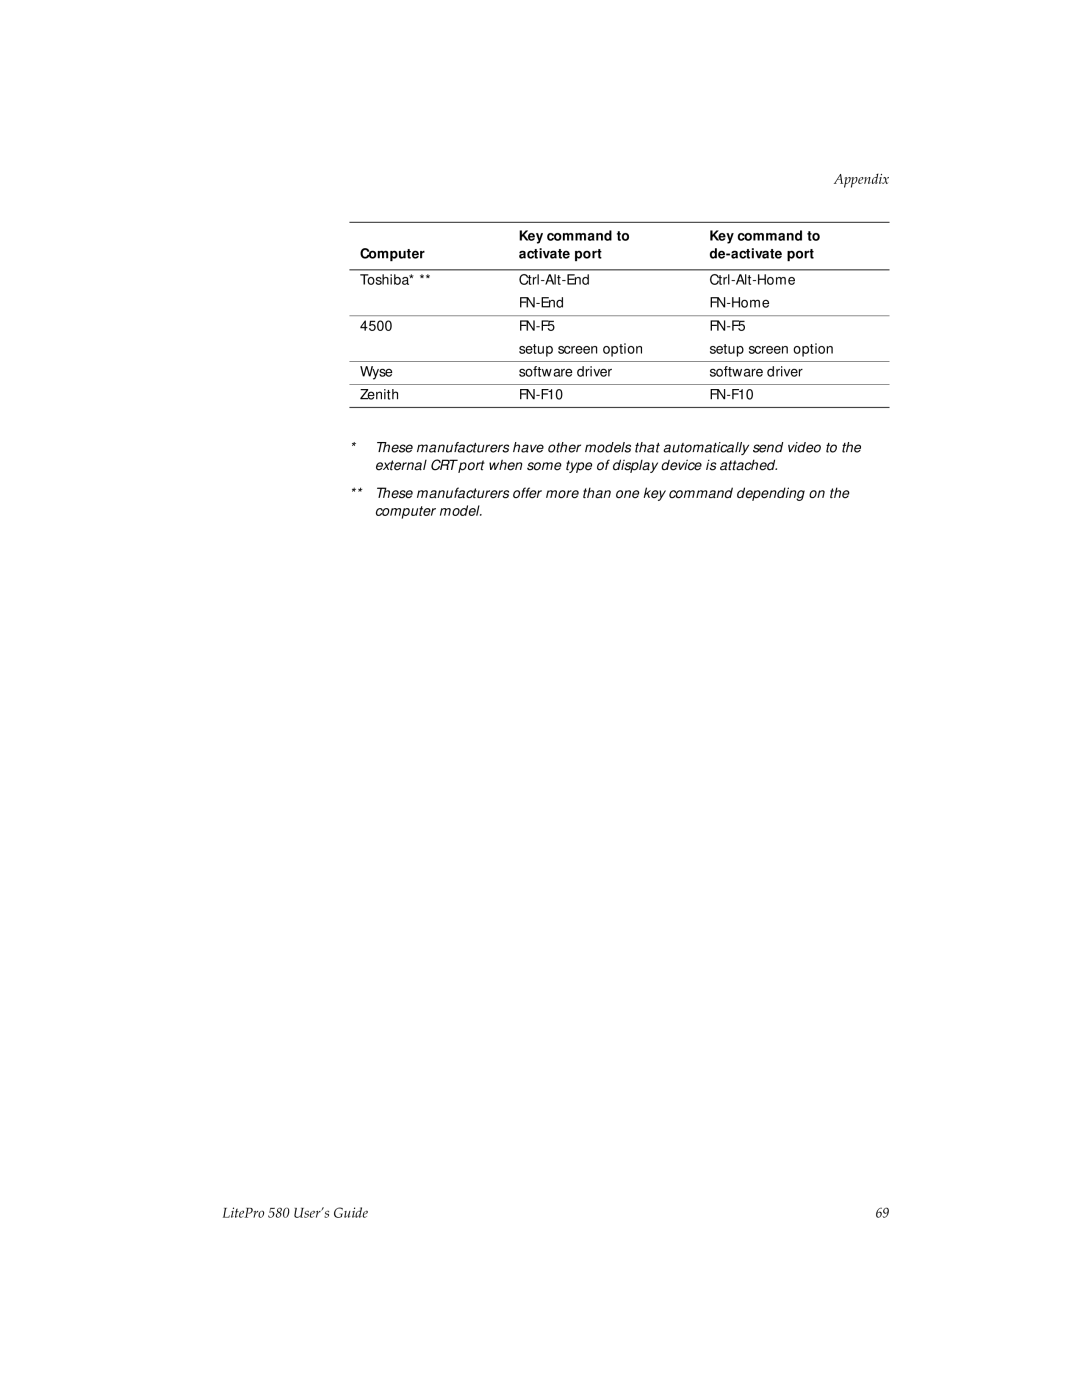 Hubbell manual Appendix, LitePro 580 User’s Guide 